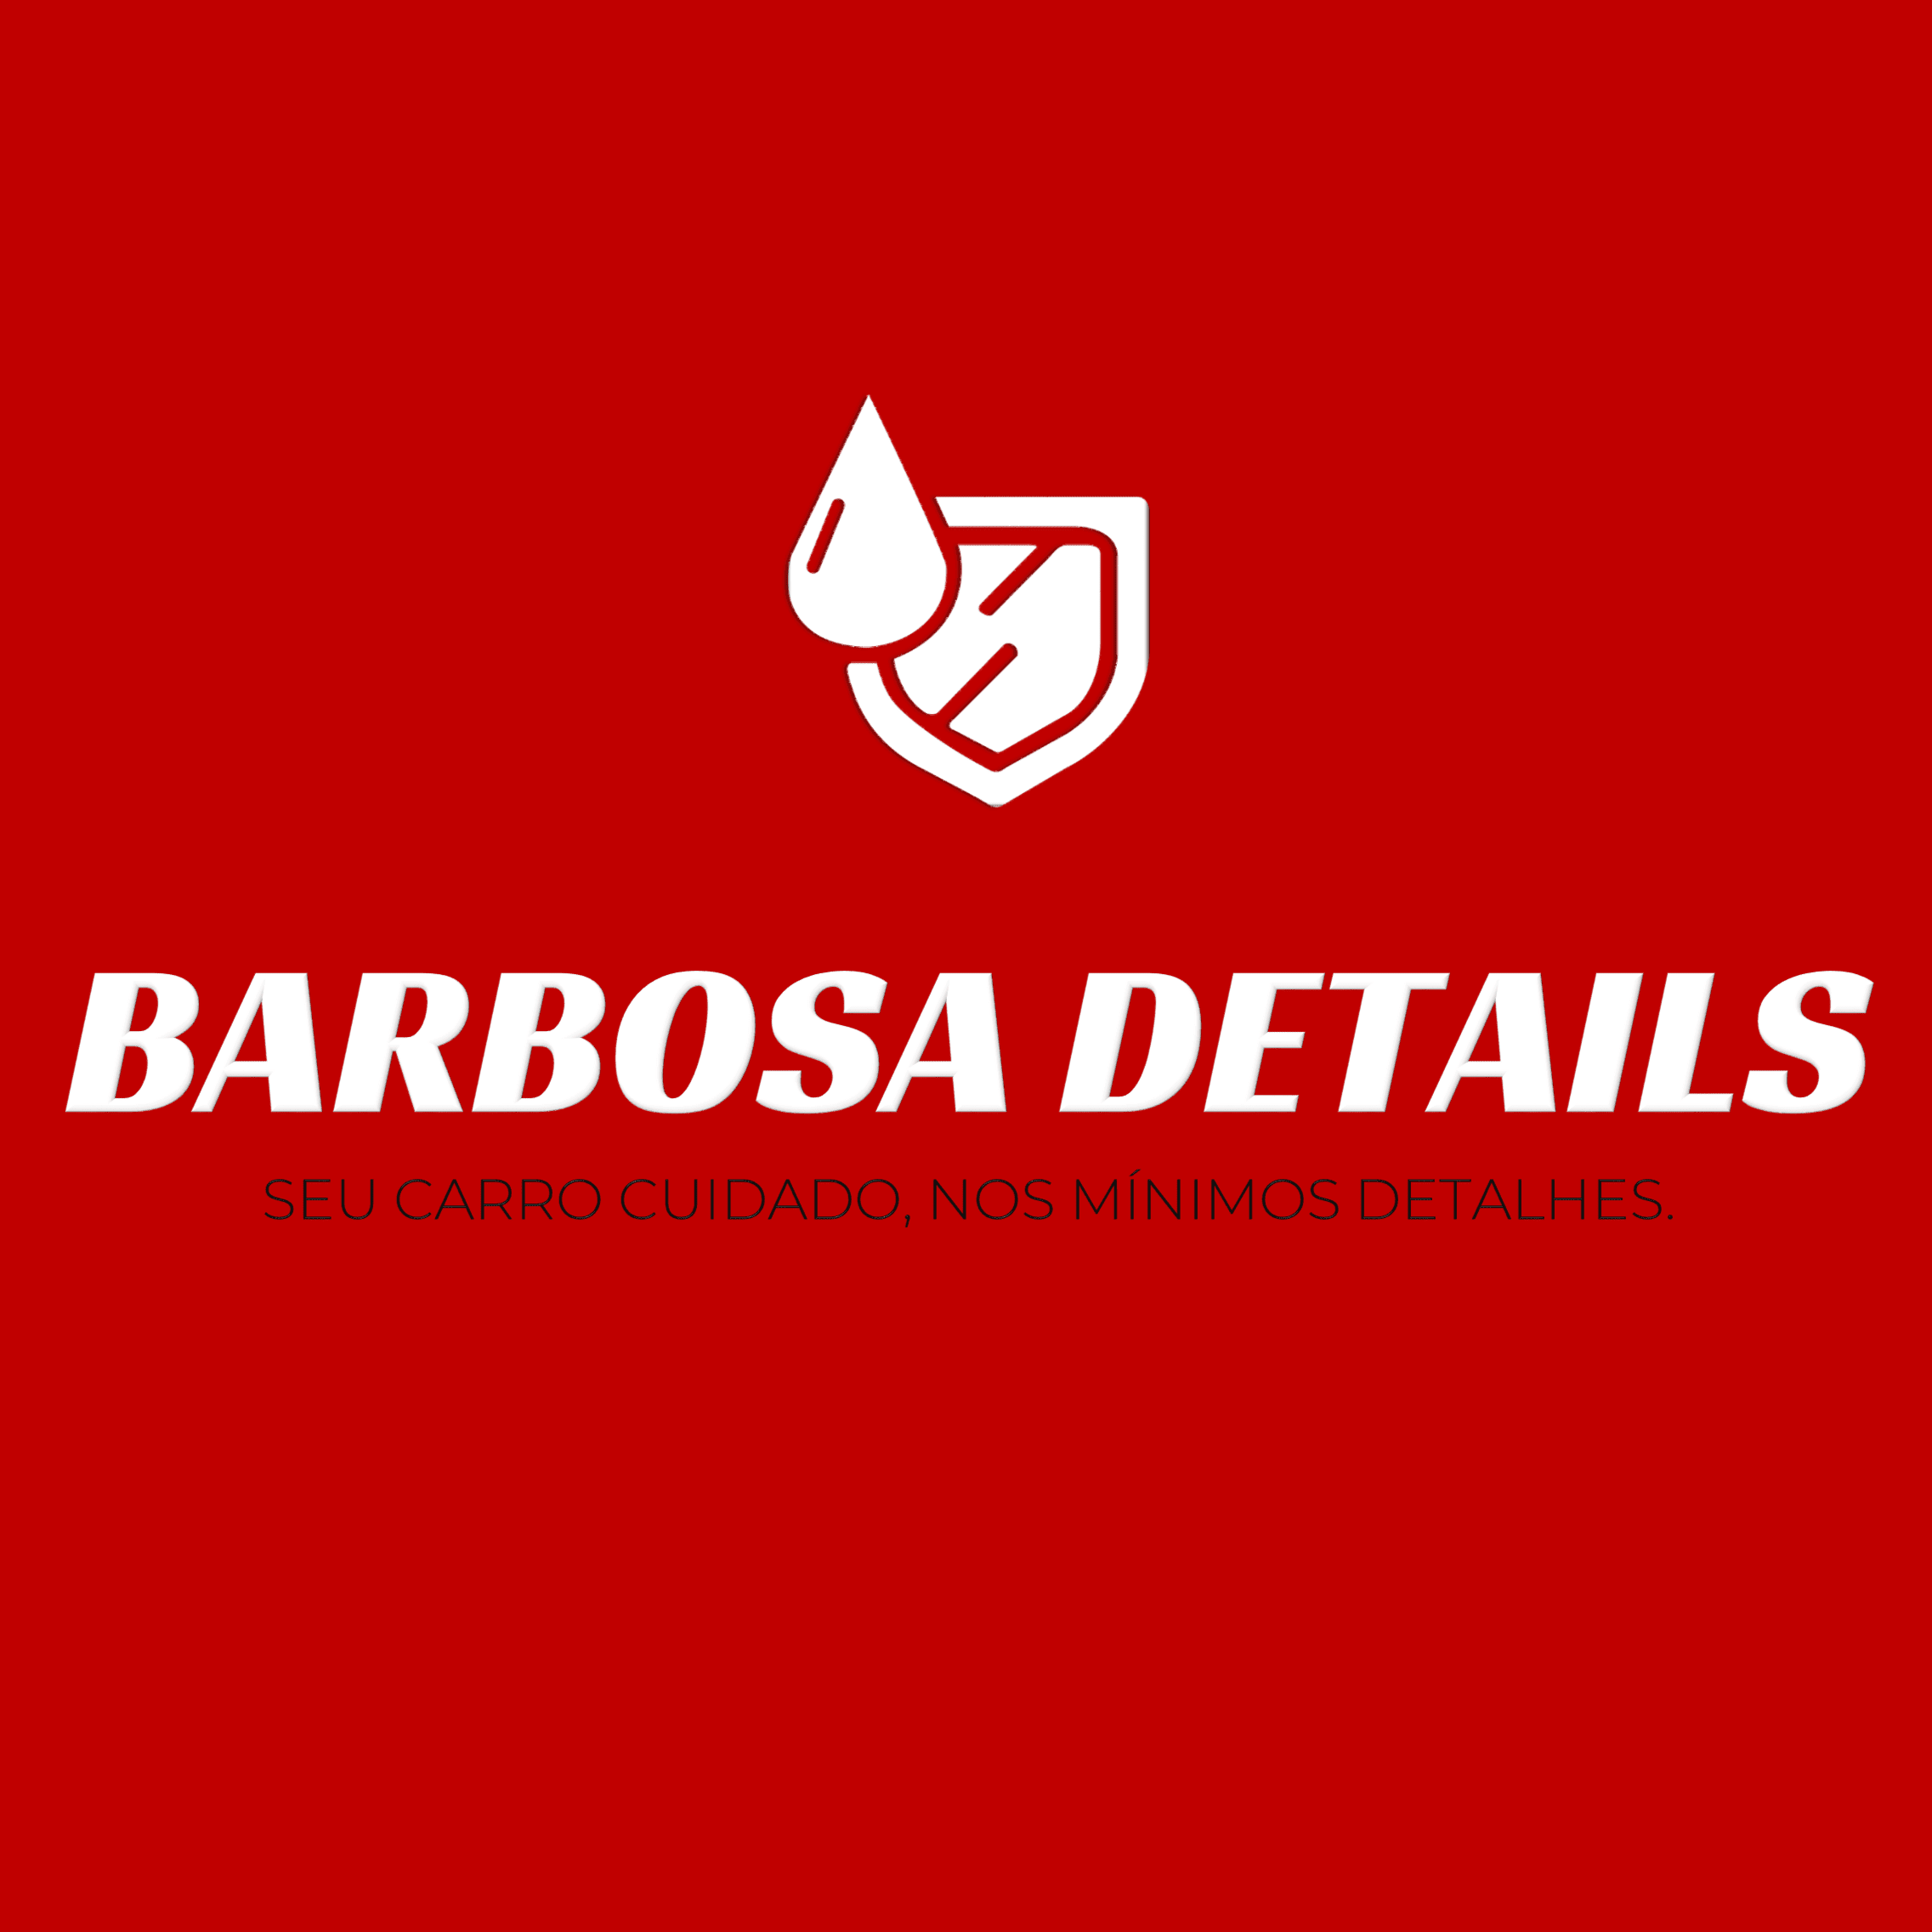 Barbosa Details